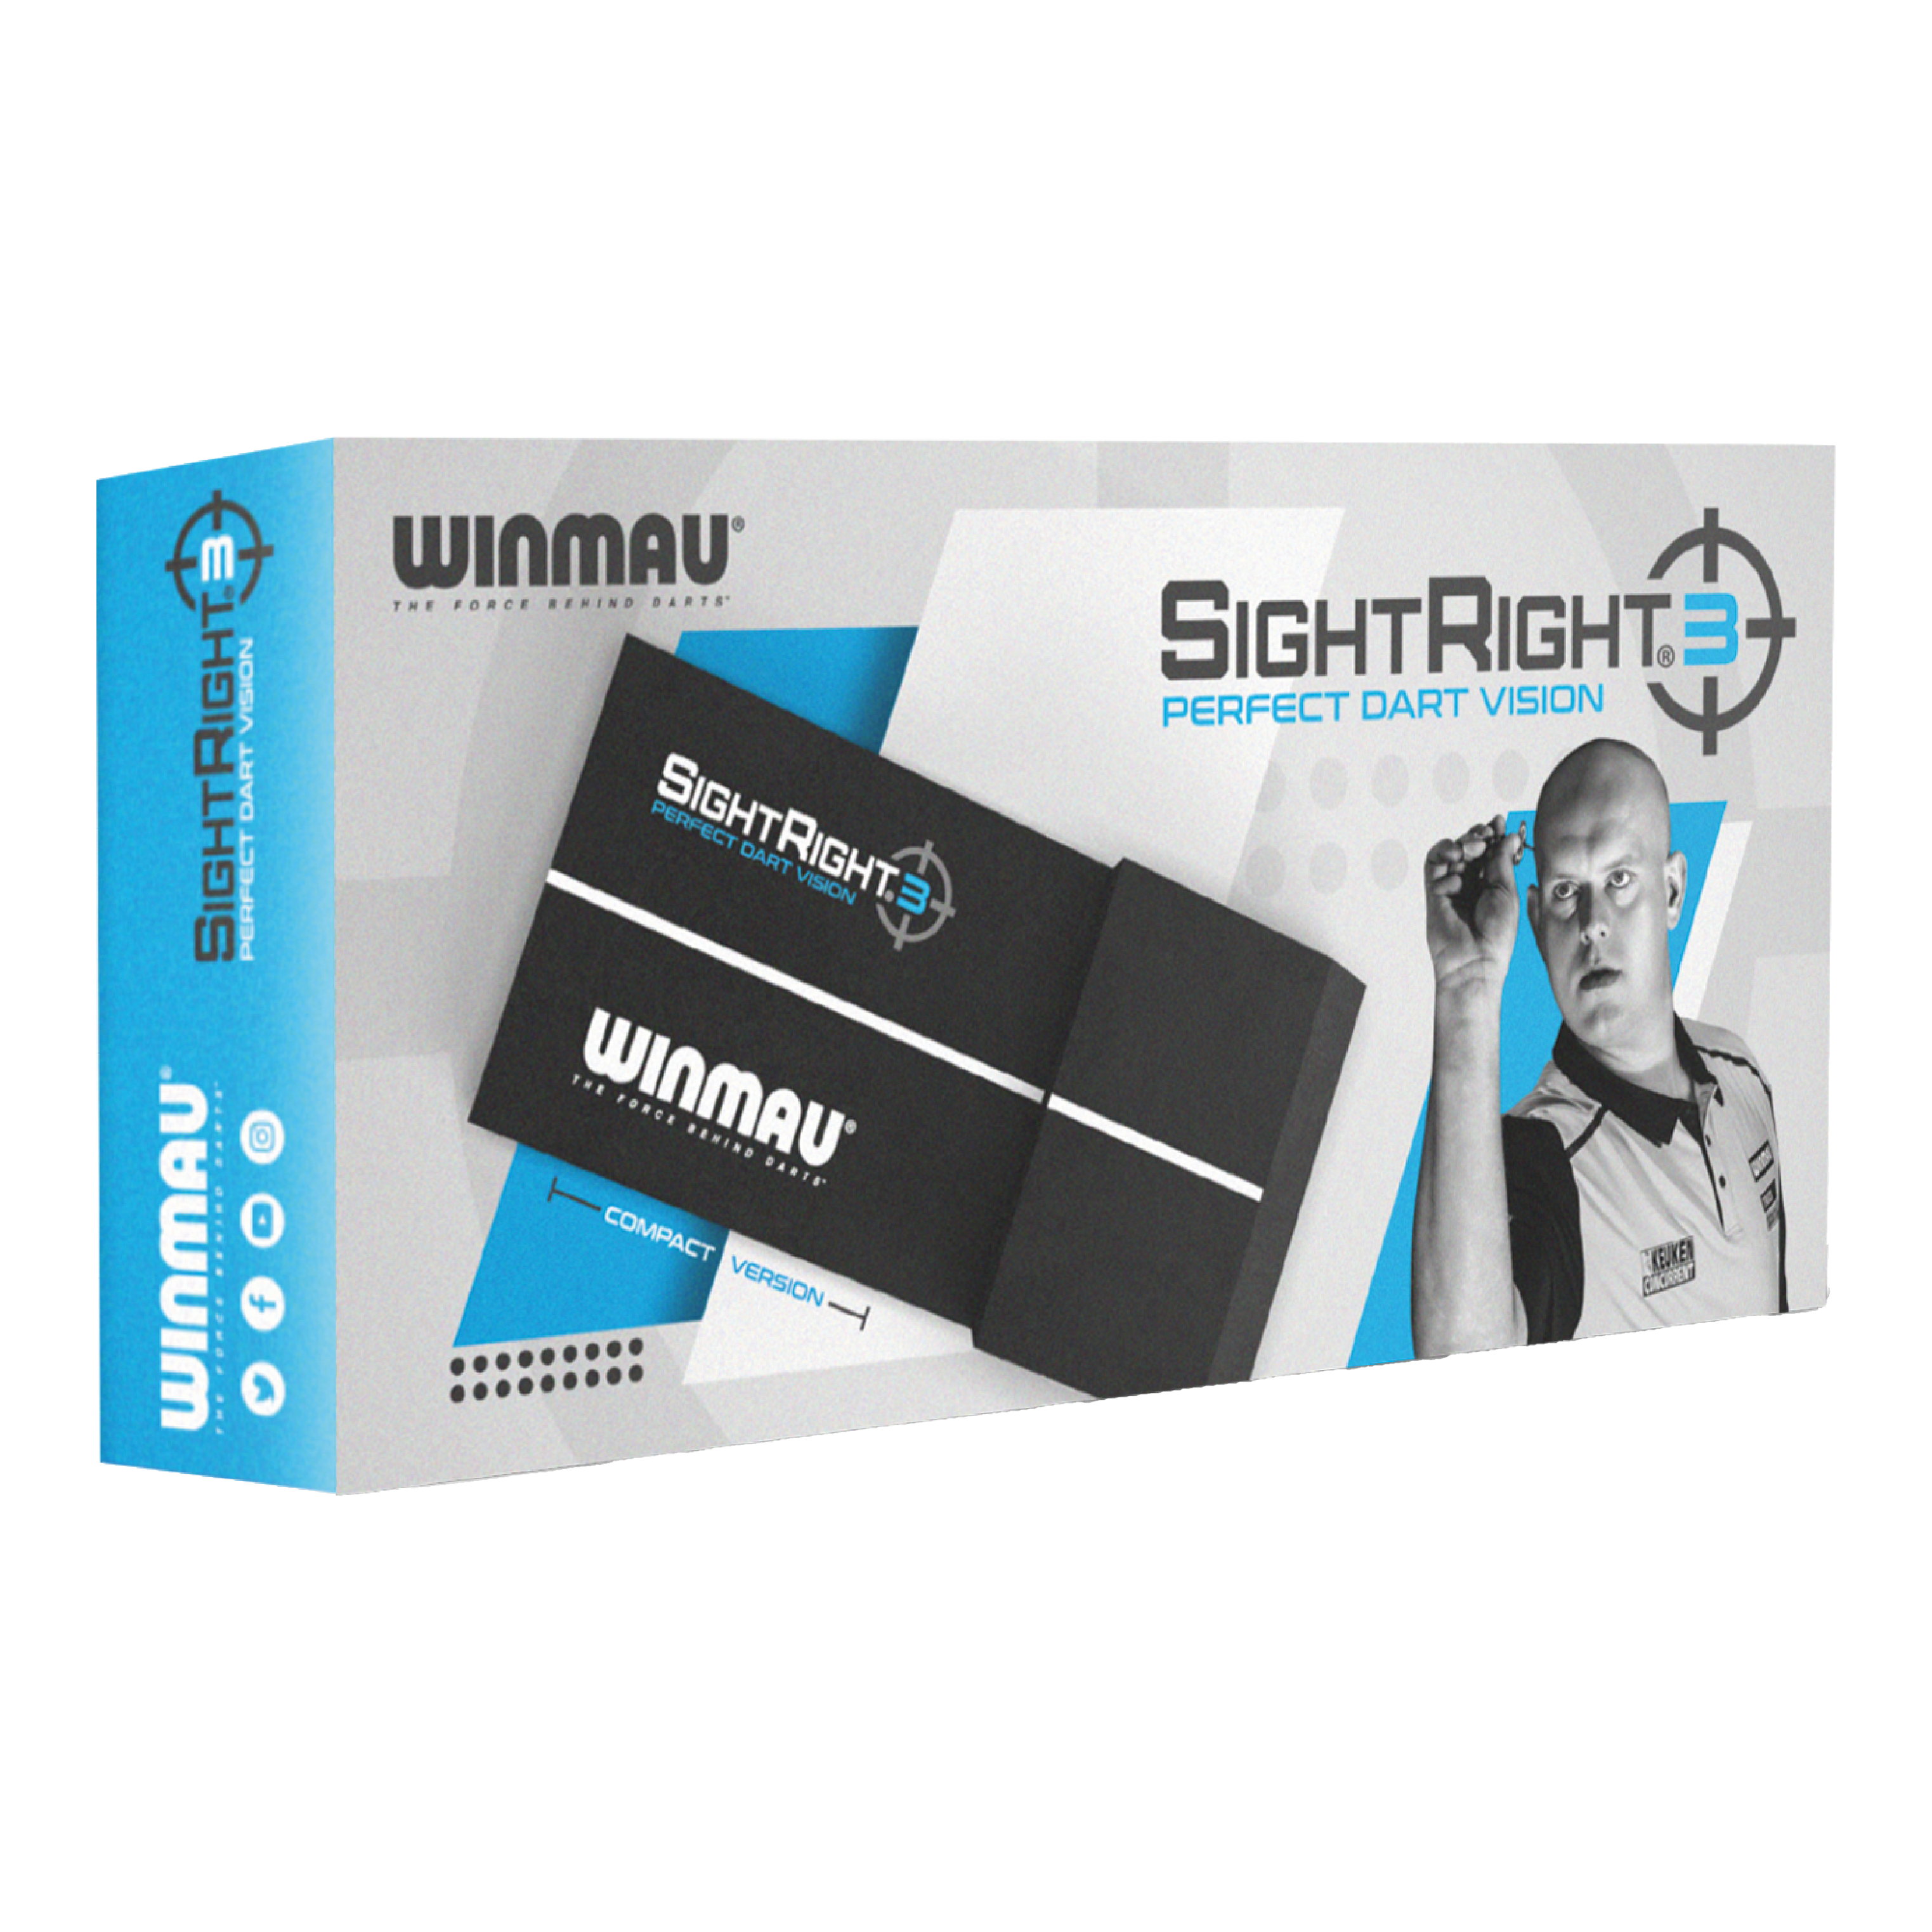 Winmau SightRight 3 - kompaktowy